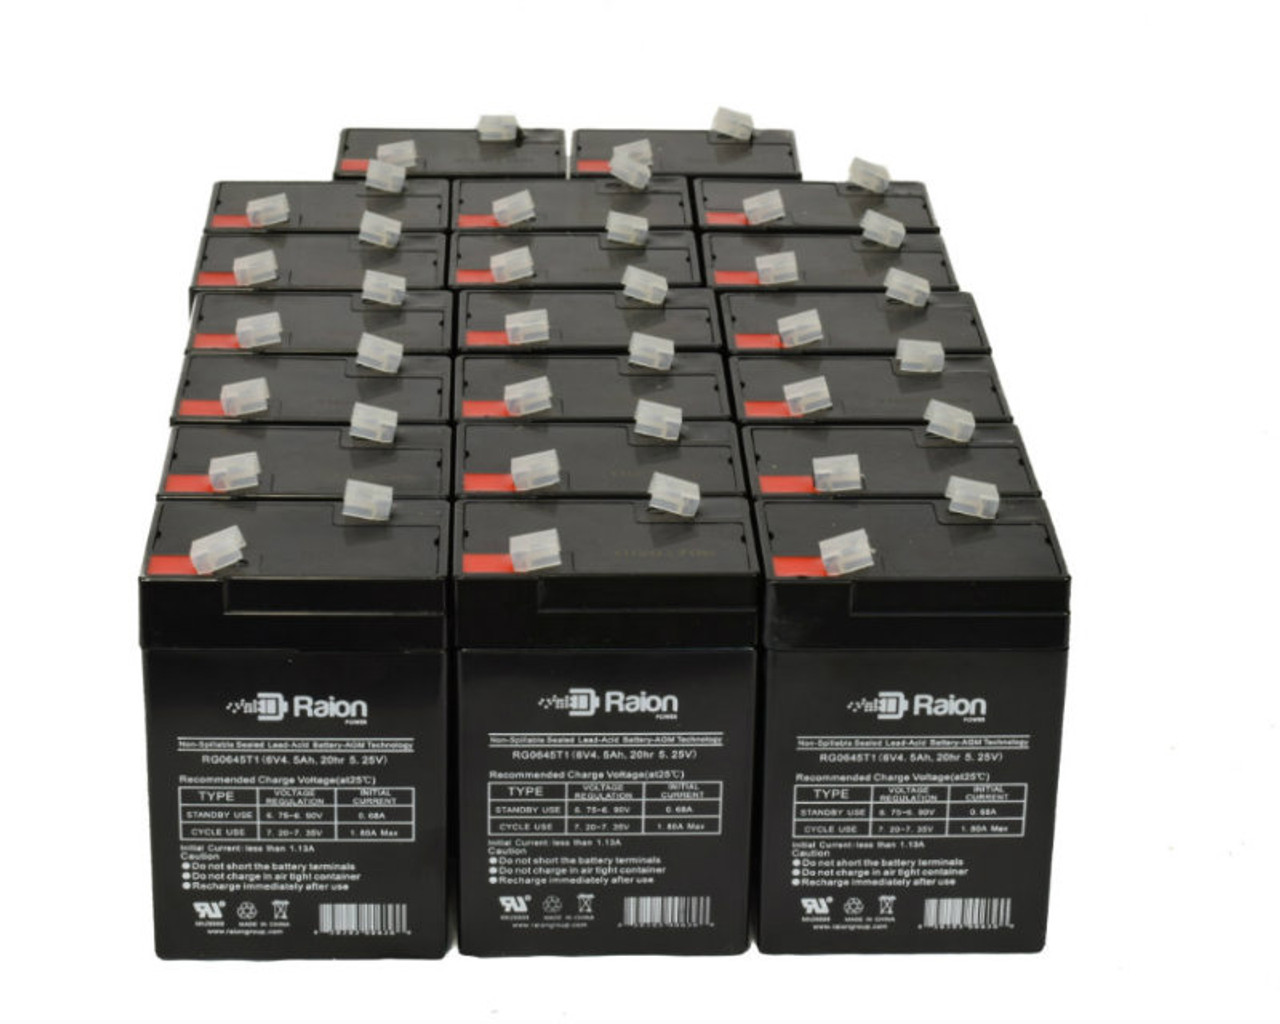 Raion Power 6V 4.5Ah Replacement Emergency Light Battery for Teledyne 2RL6S5R - 20 Pack